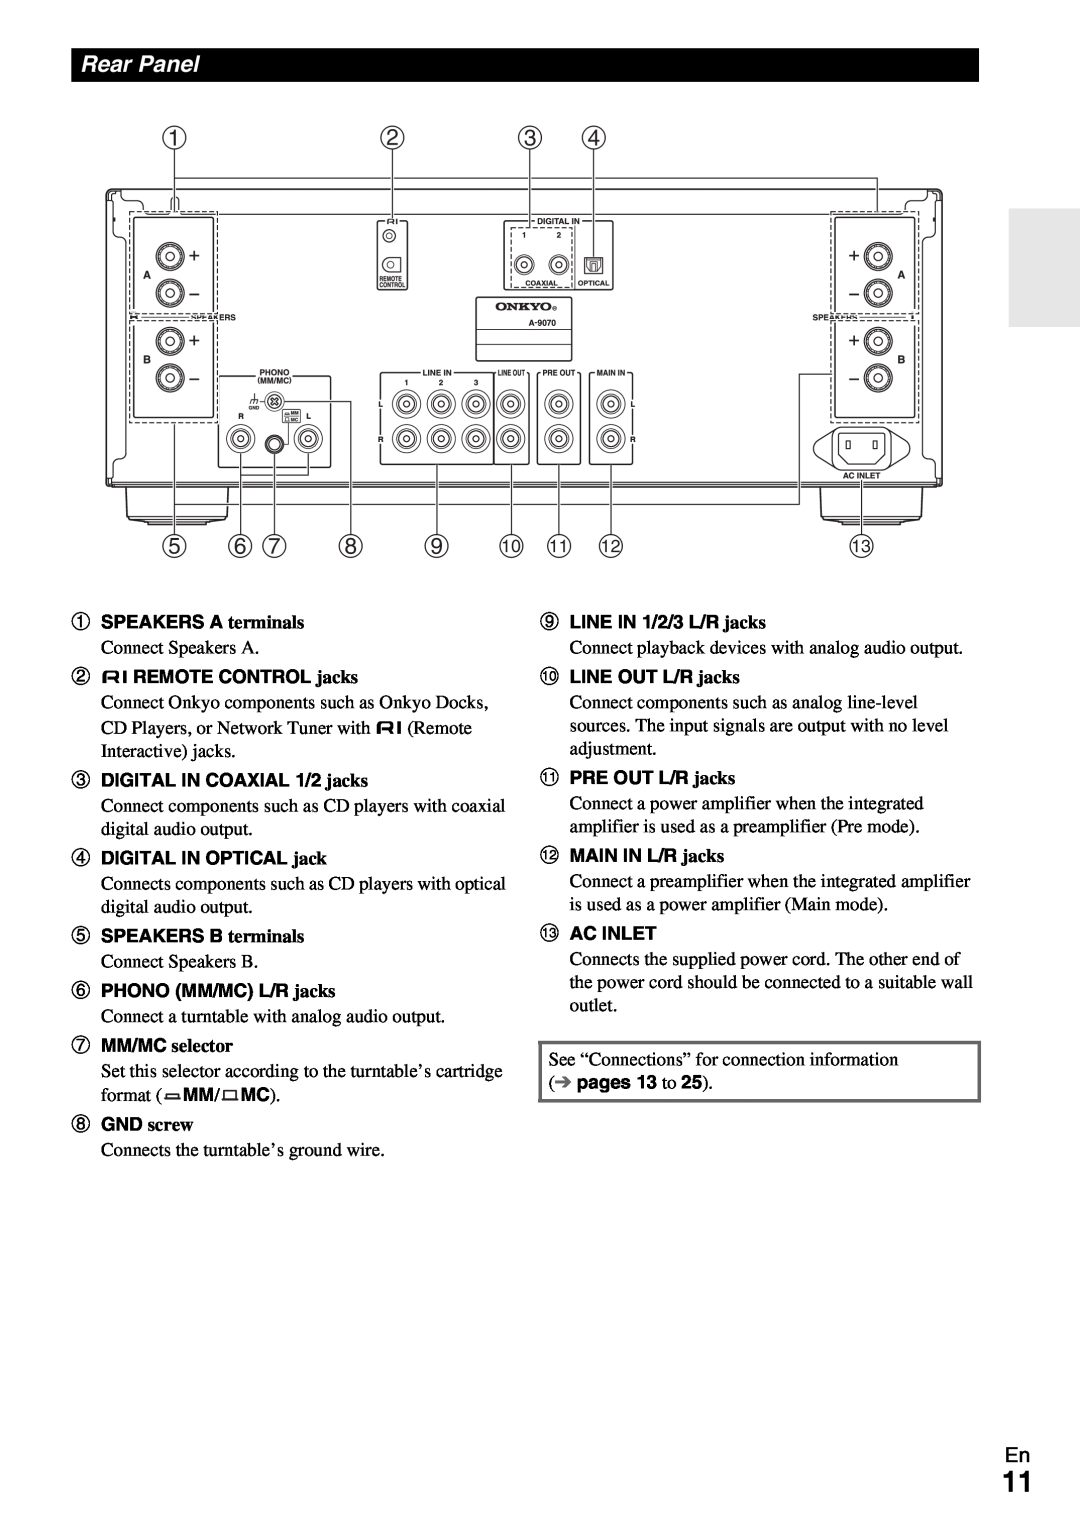 Onkyo A-9070 instruction manual e f g h, j k l, Rear Panel, gMM/MC selector, hGND screw 